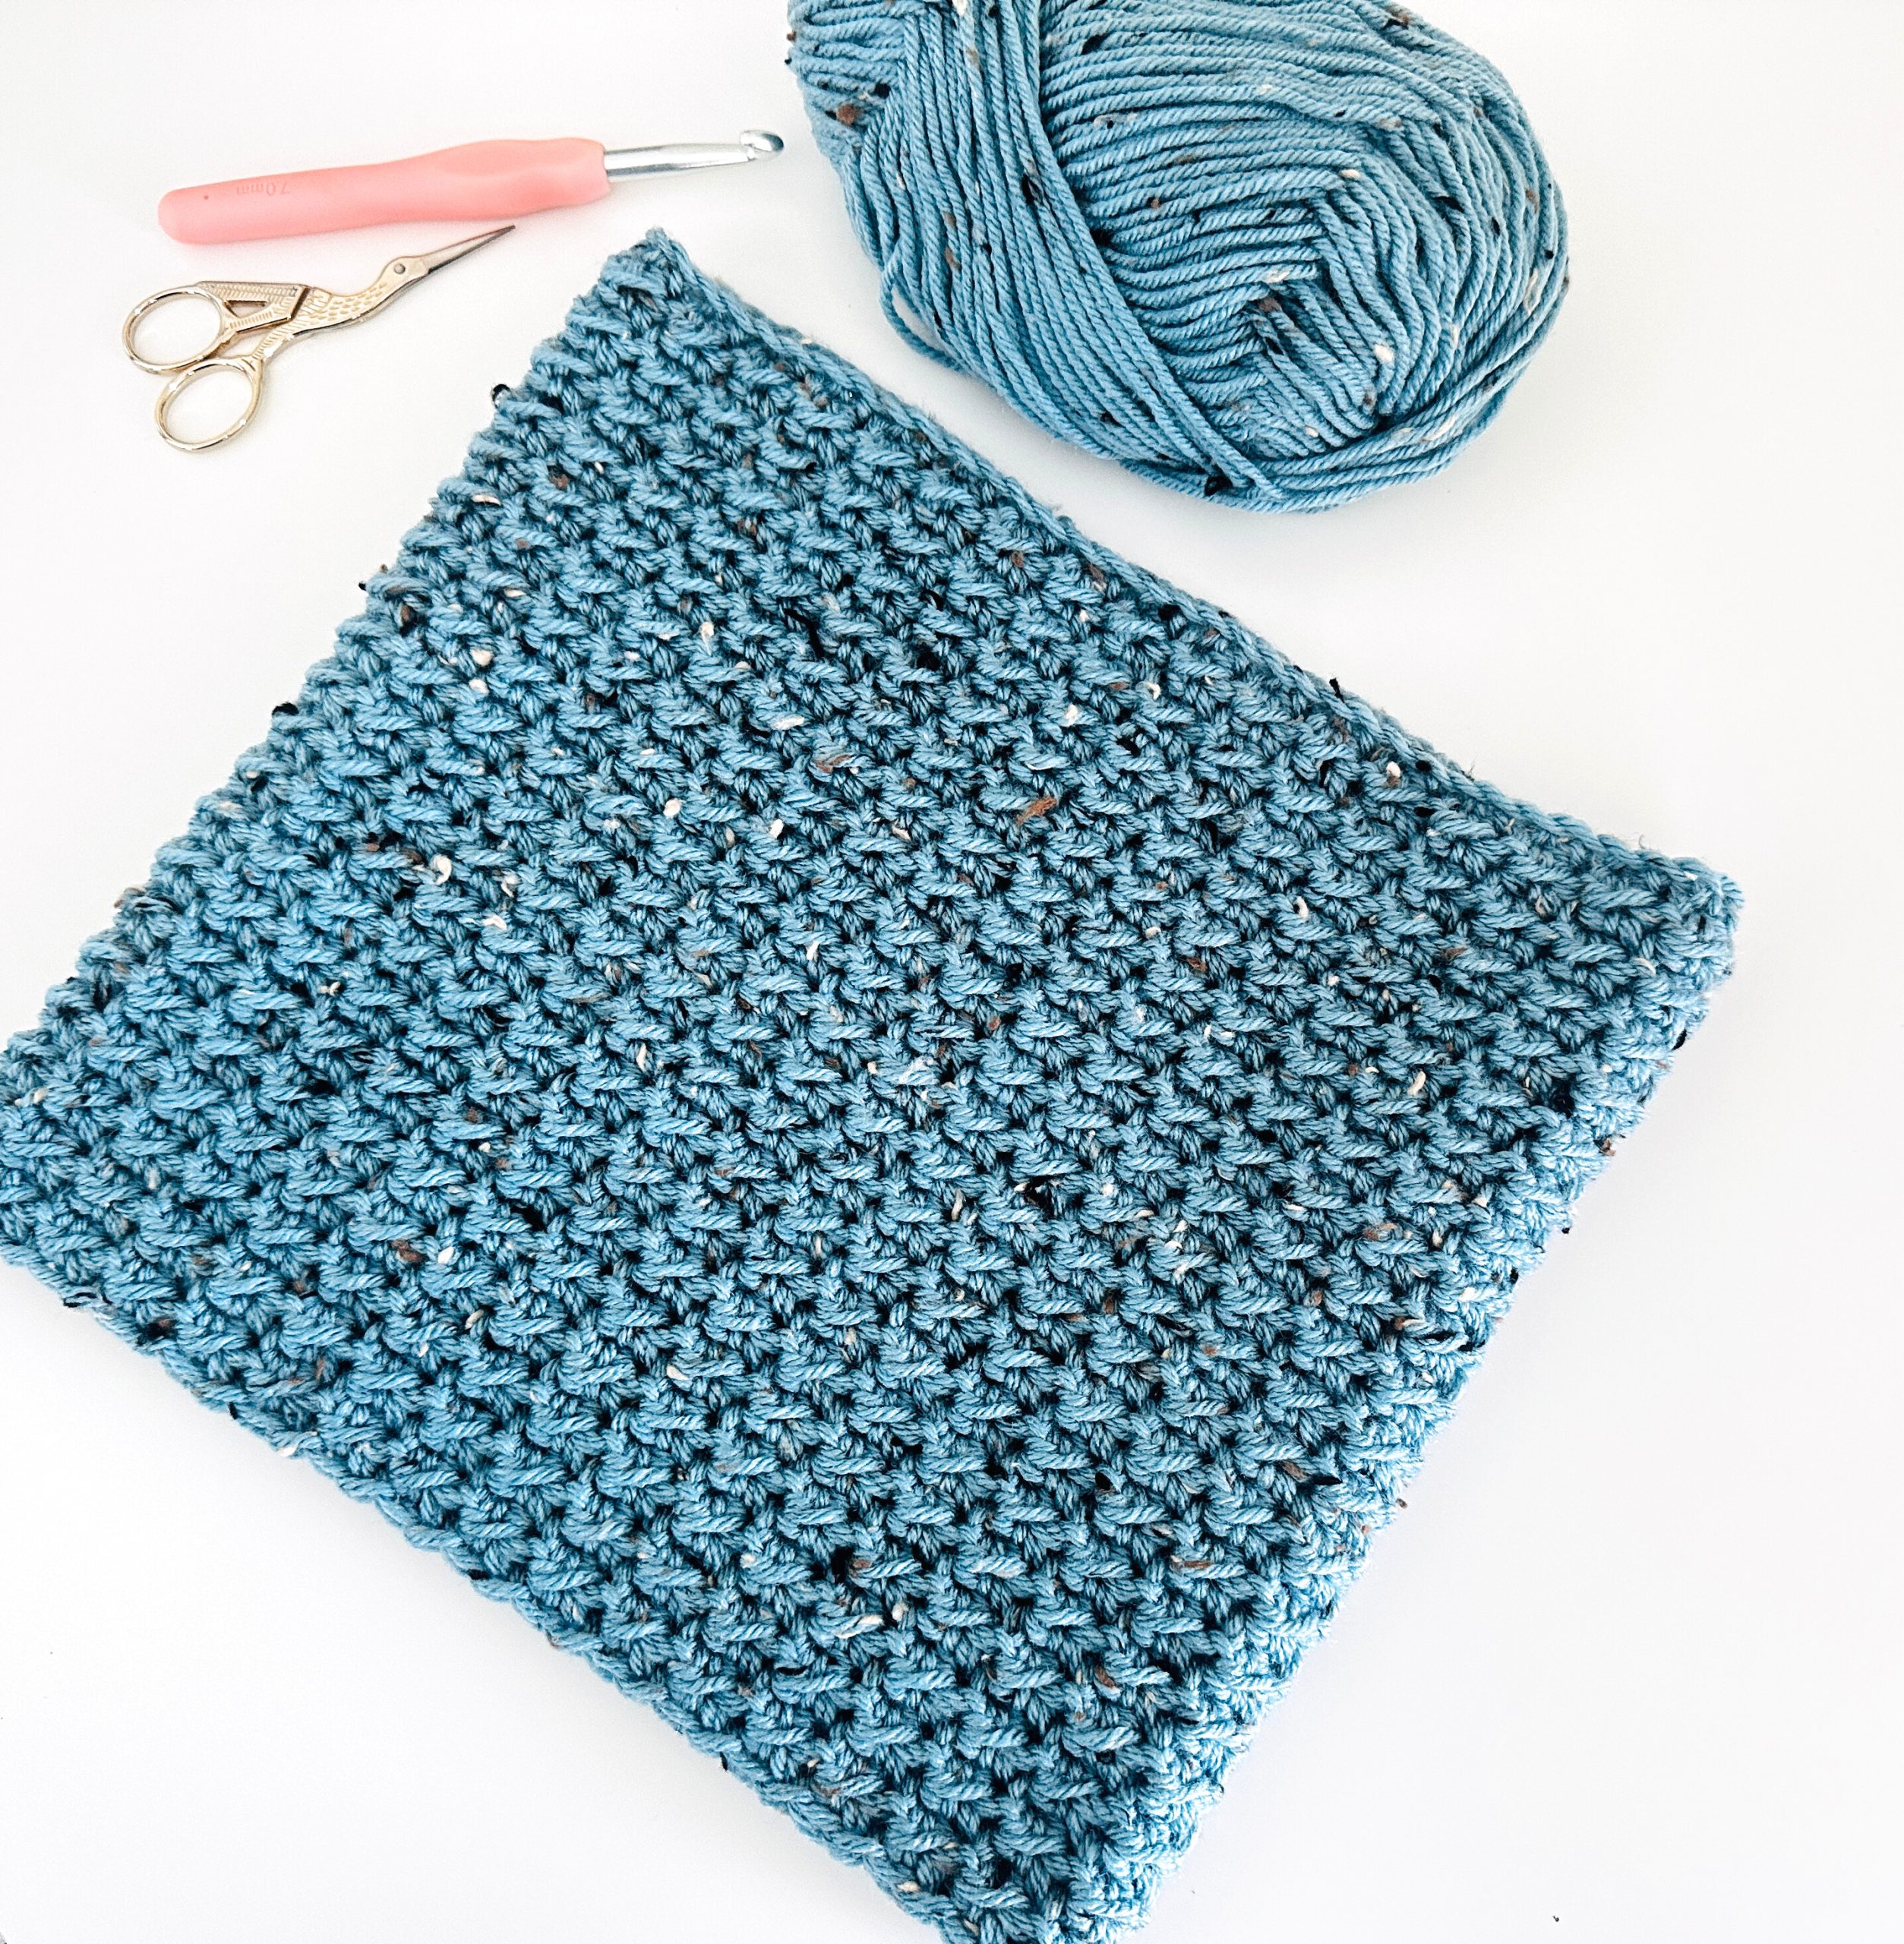 Neck Warmer Pattern - Easy Beginner Knitting Project